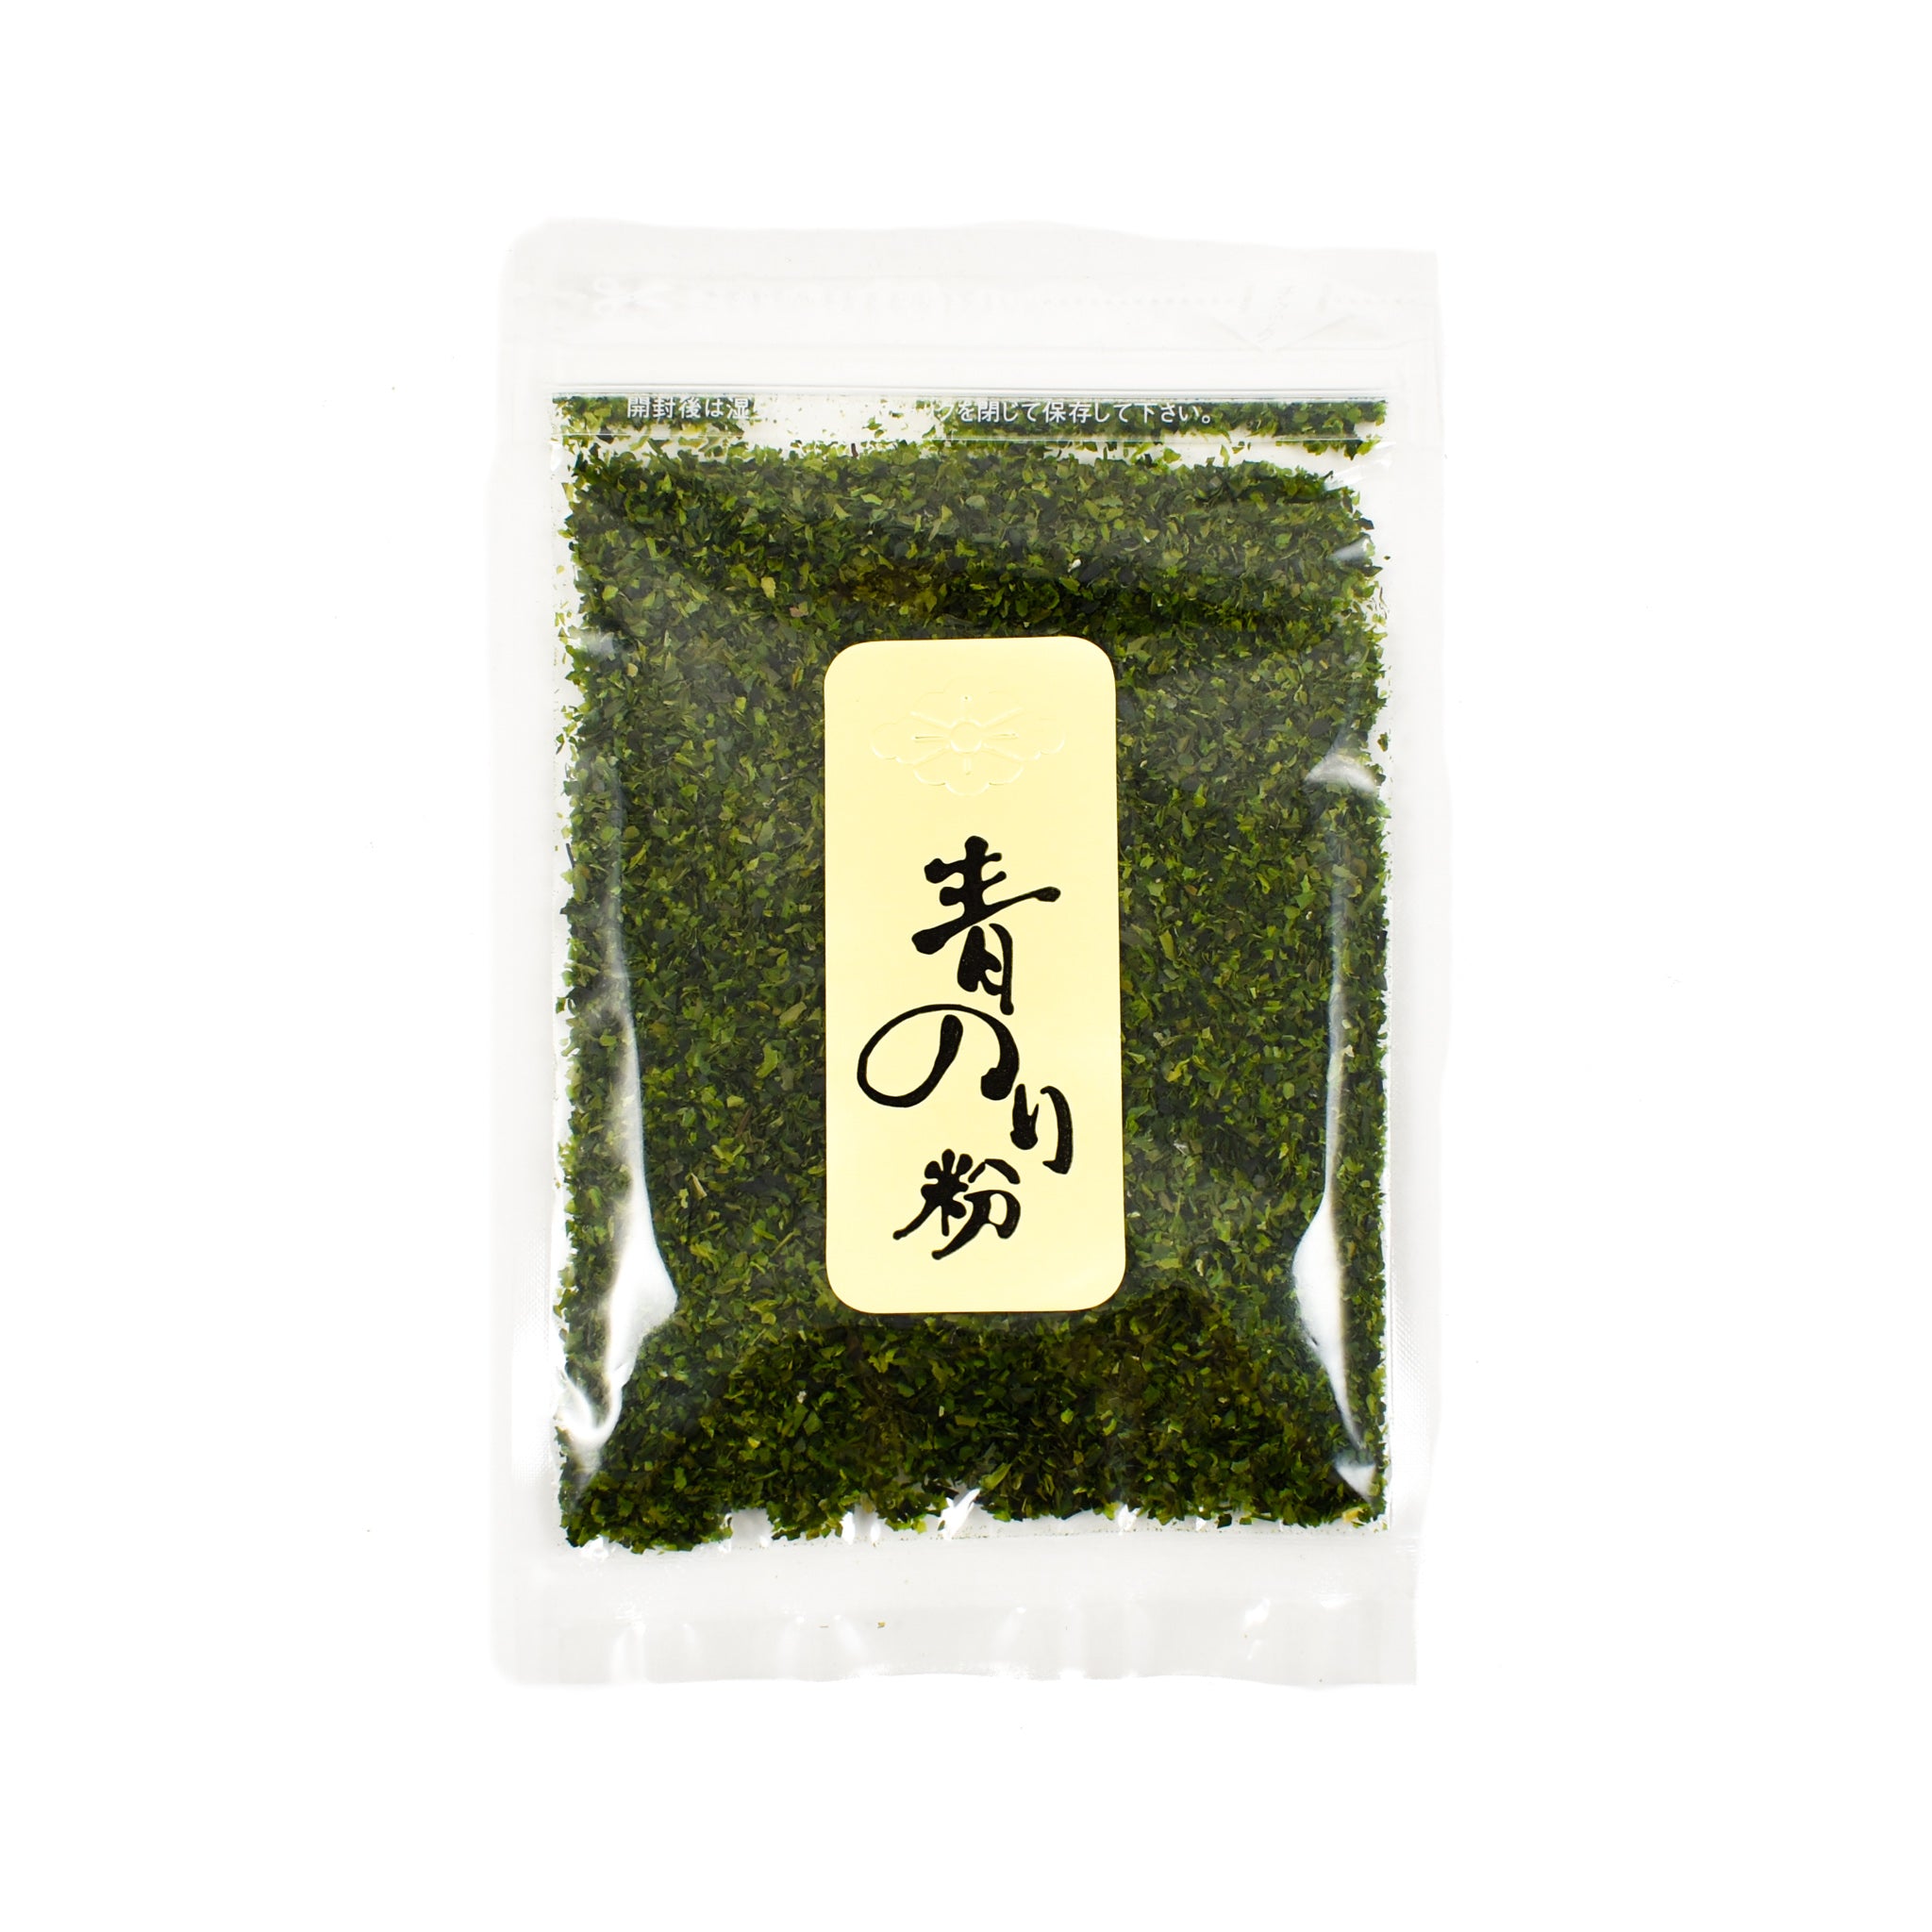 Hanabishi Aonori Seaweed Flakes 20g Ingredients Seaweed Squid Ink Fish Chinese Food